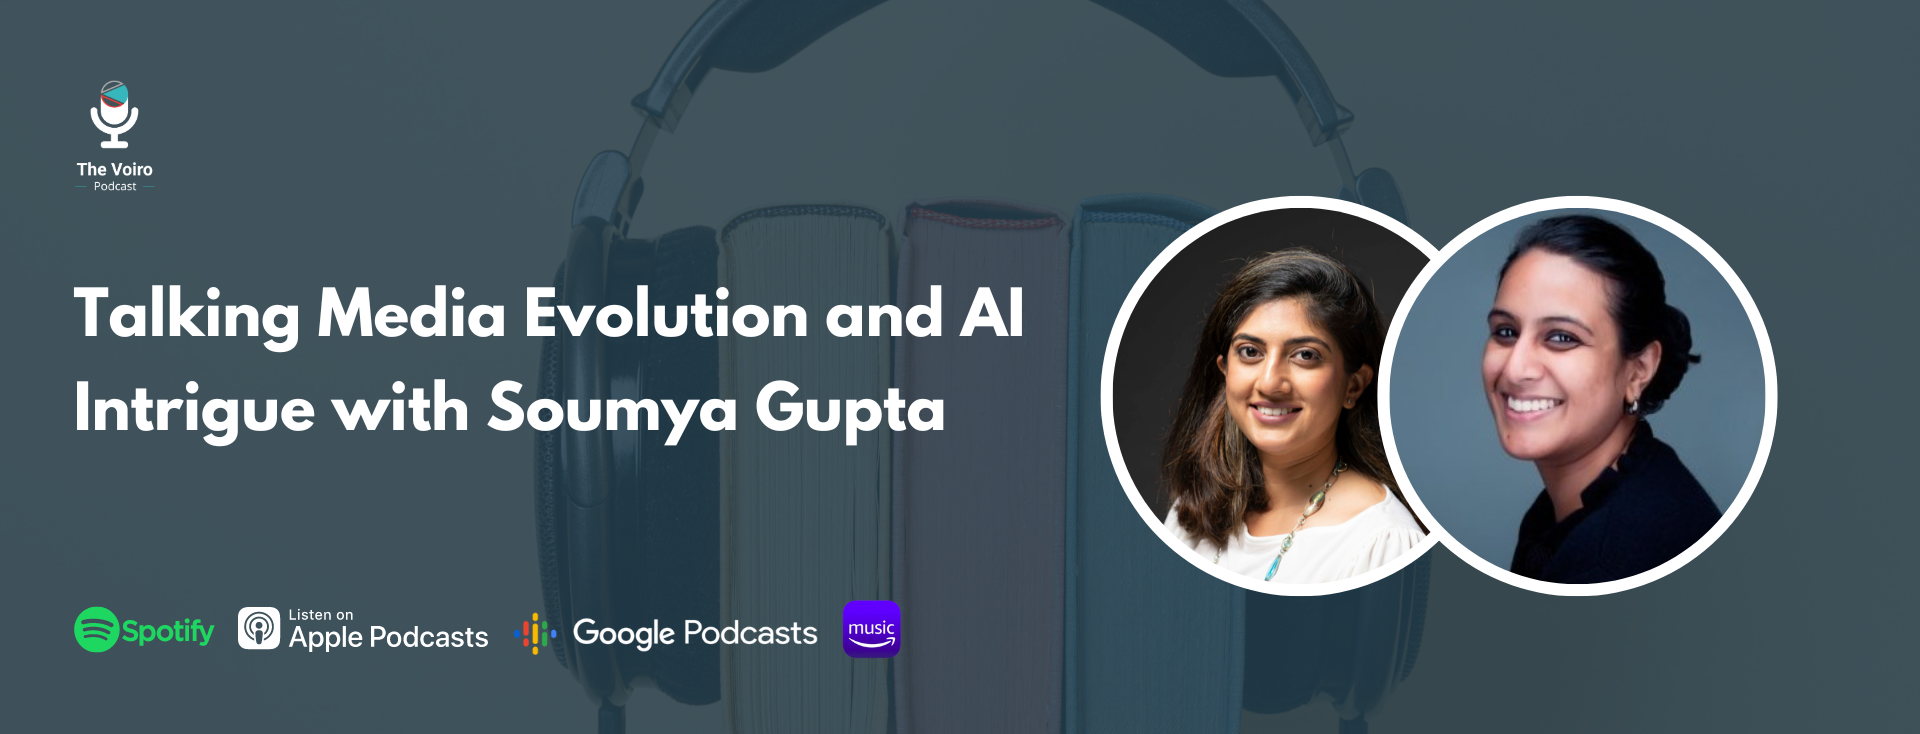 Talking Media Evolution and AI Intrigue with Soumya Gupta